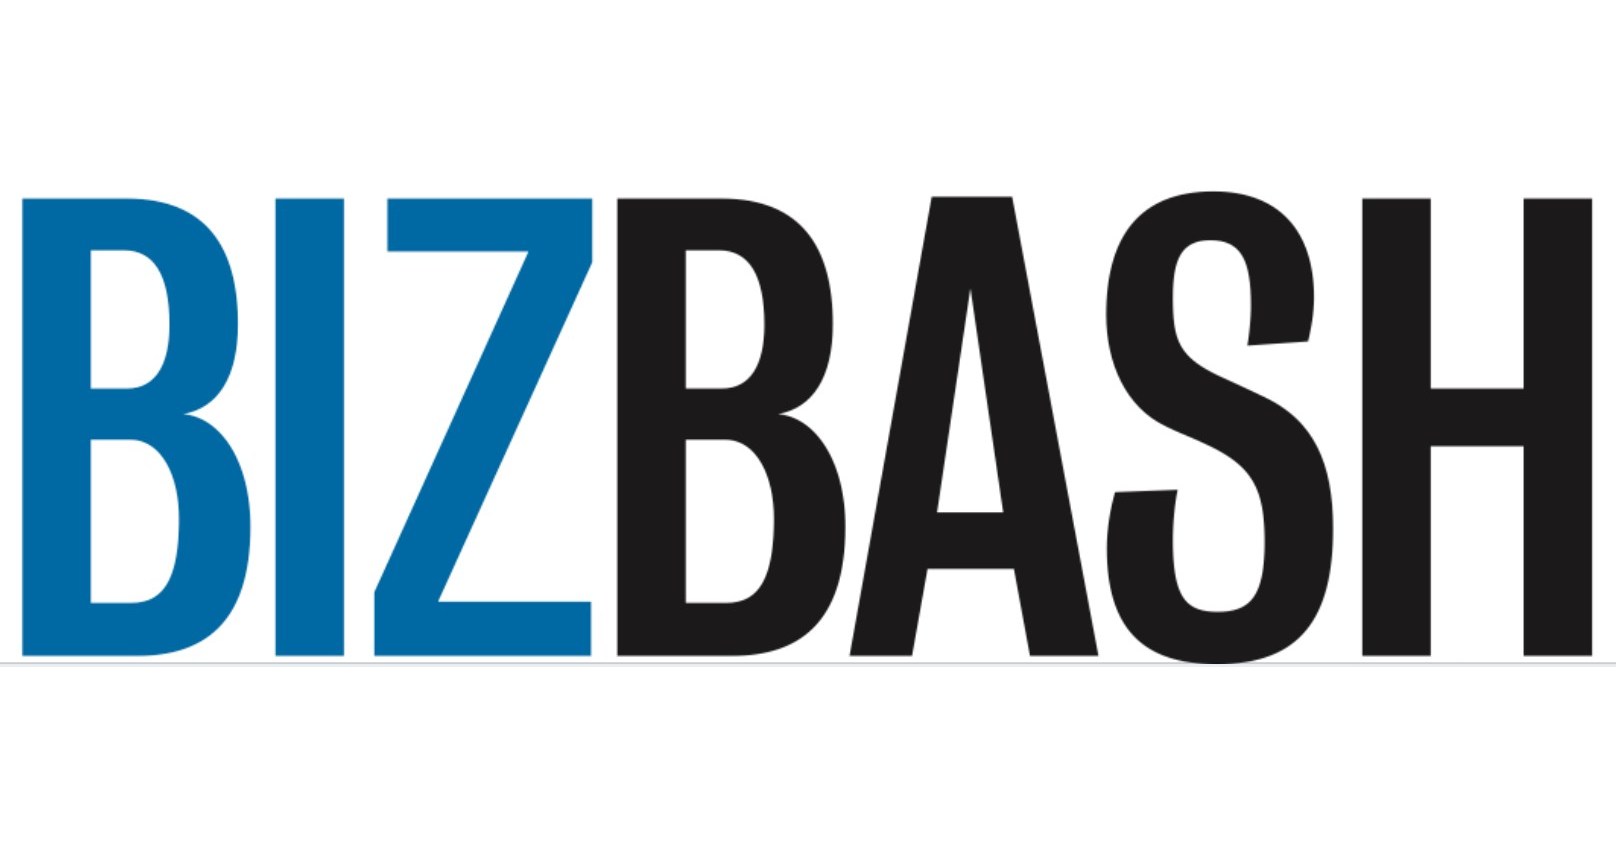 Biz bash logo on a white background.